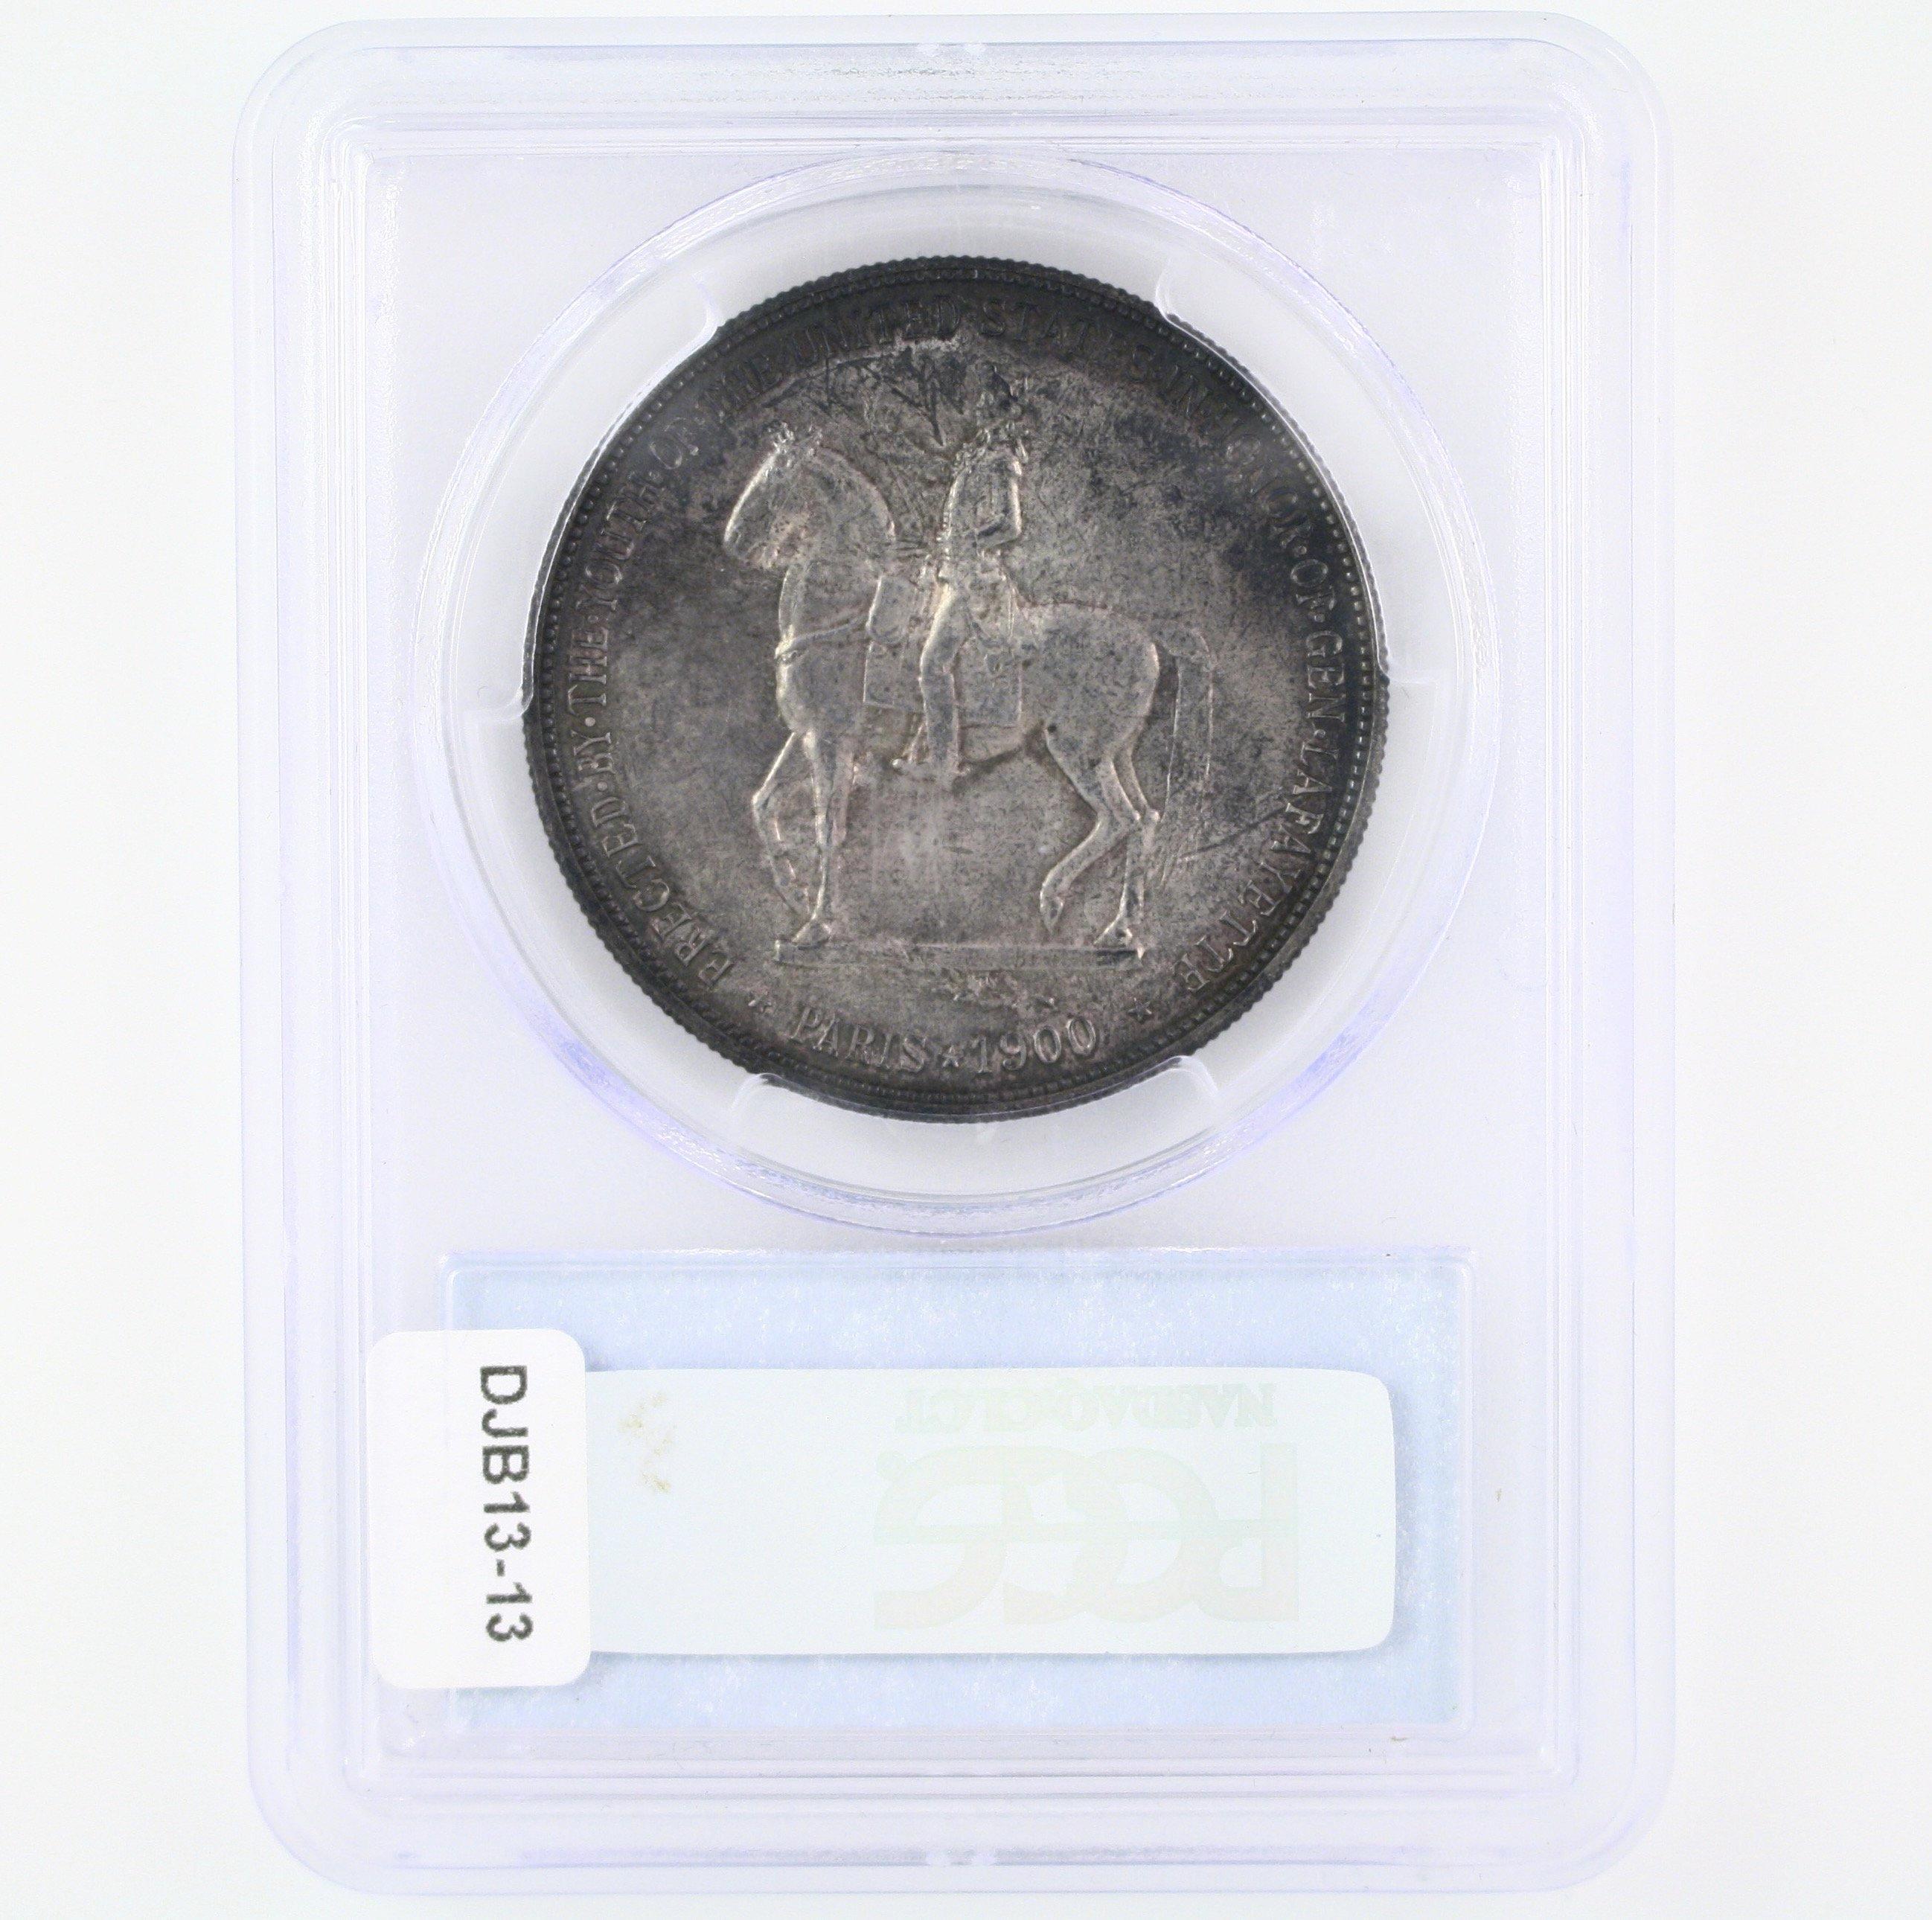 Certified 1900 U.S. Lafayette commemorative silver dollar